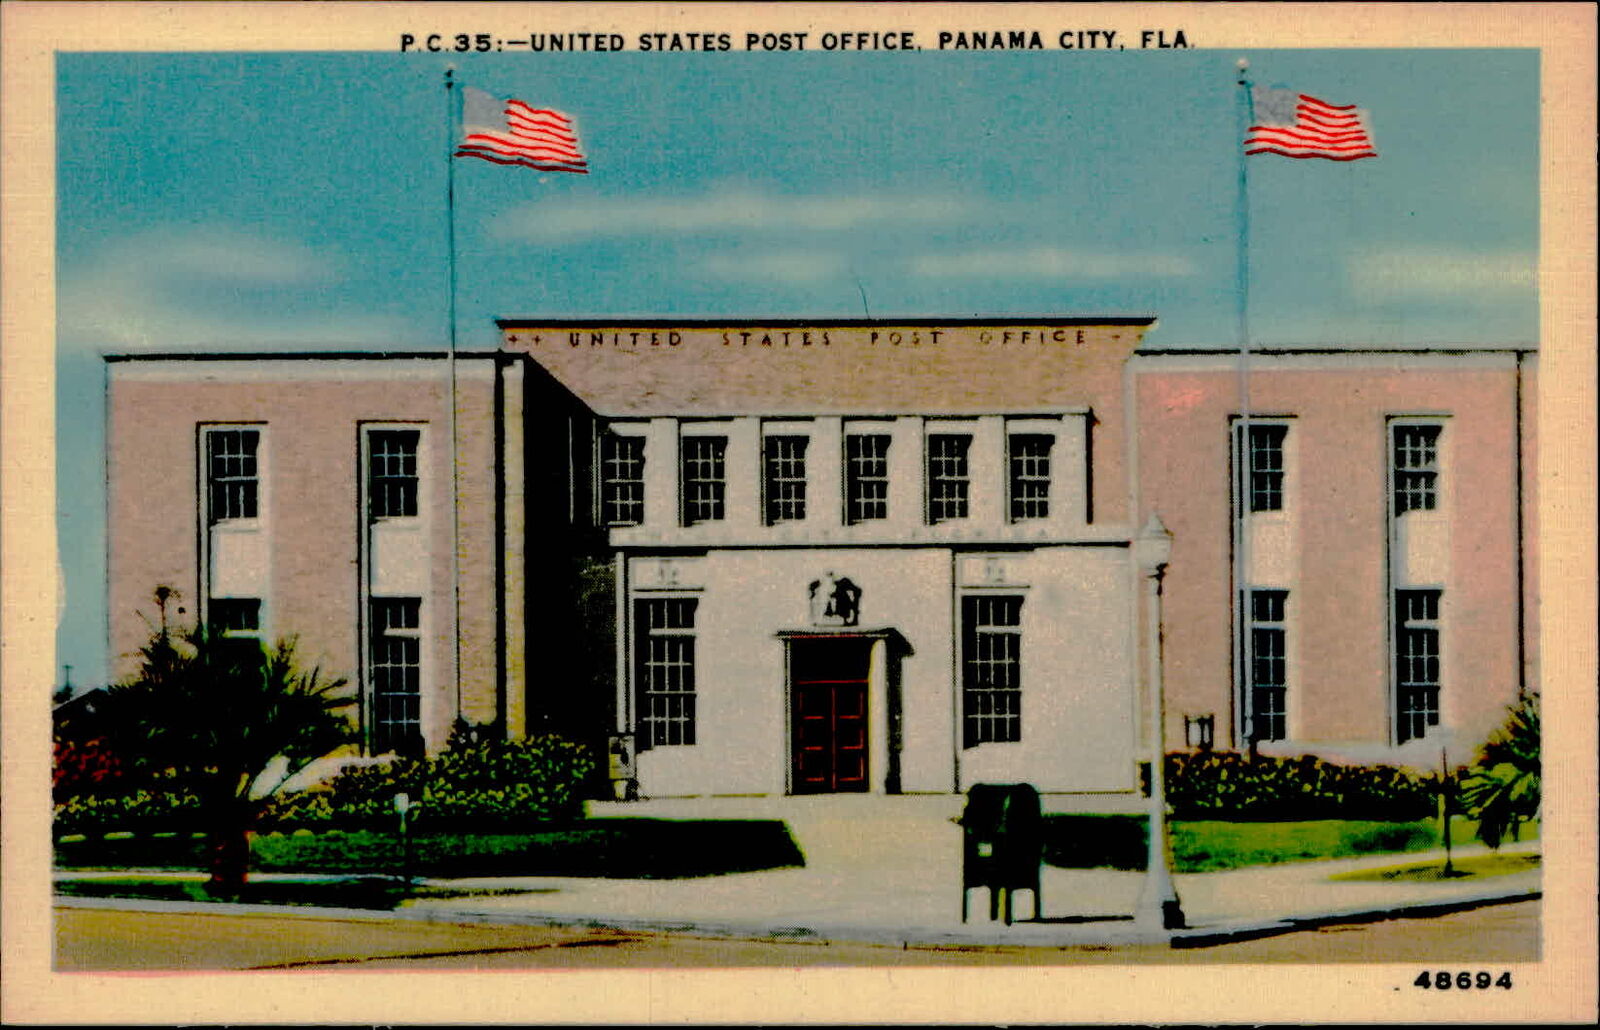 Postcard: P.C.35:-UNITED STATES POST OFFICE, PANAMA CITY, FLA.